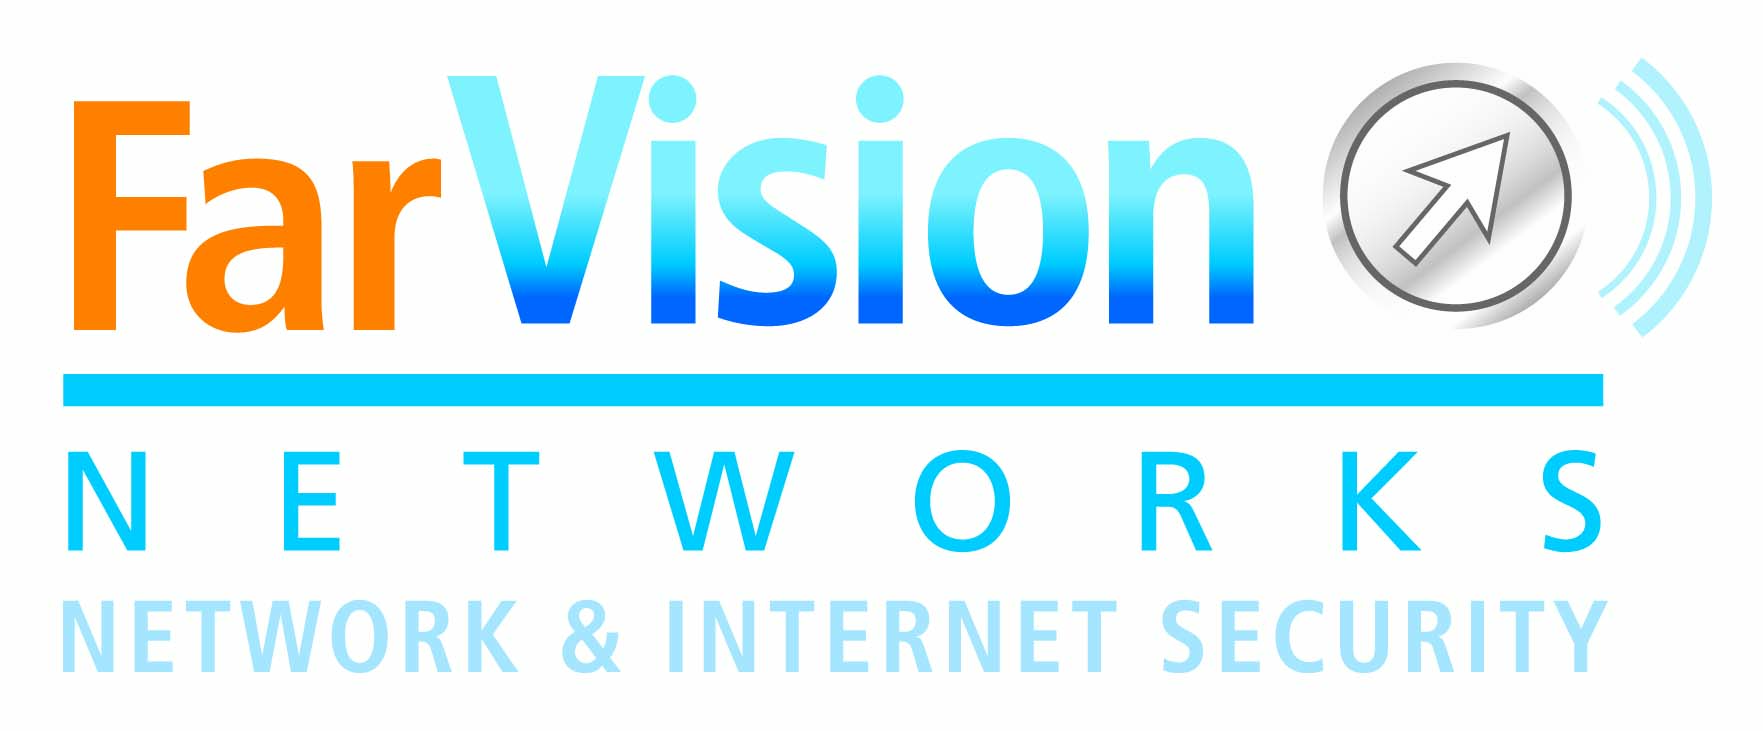 farvision logo